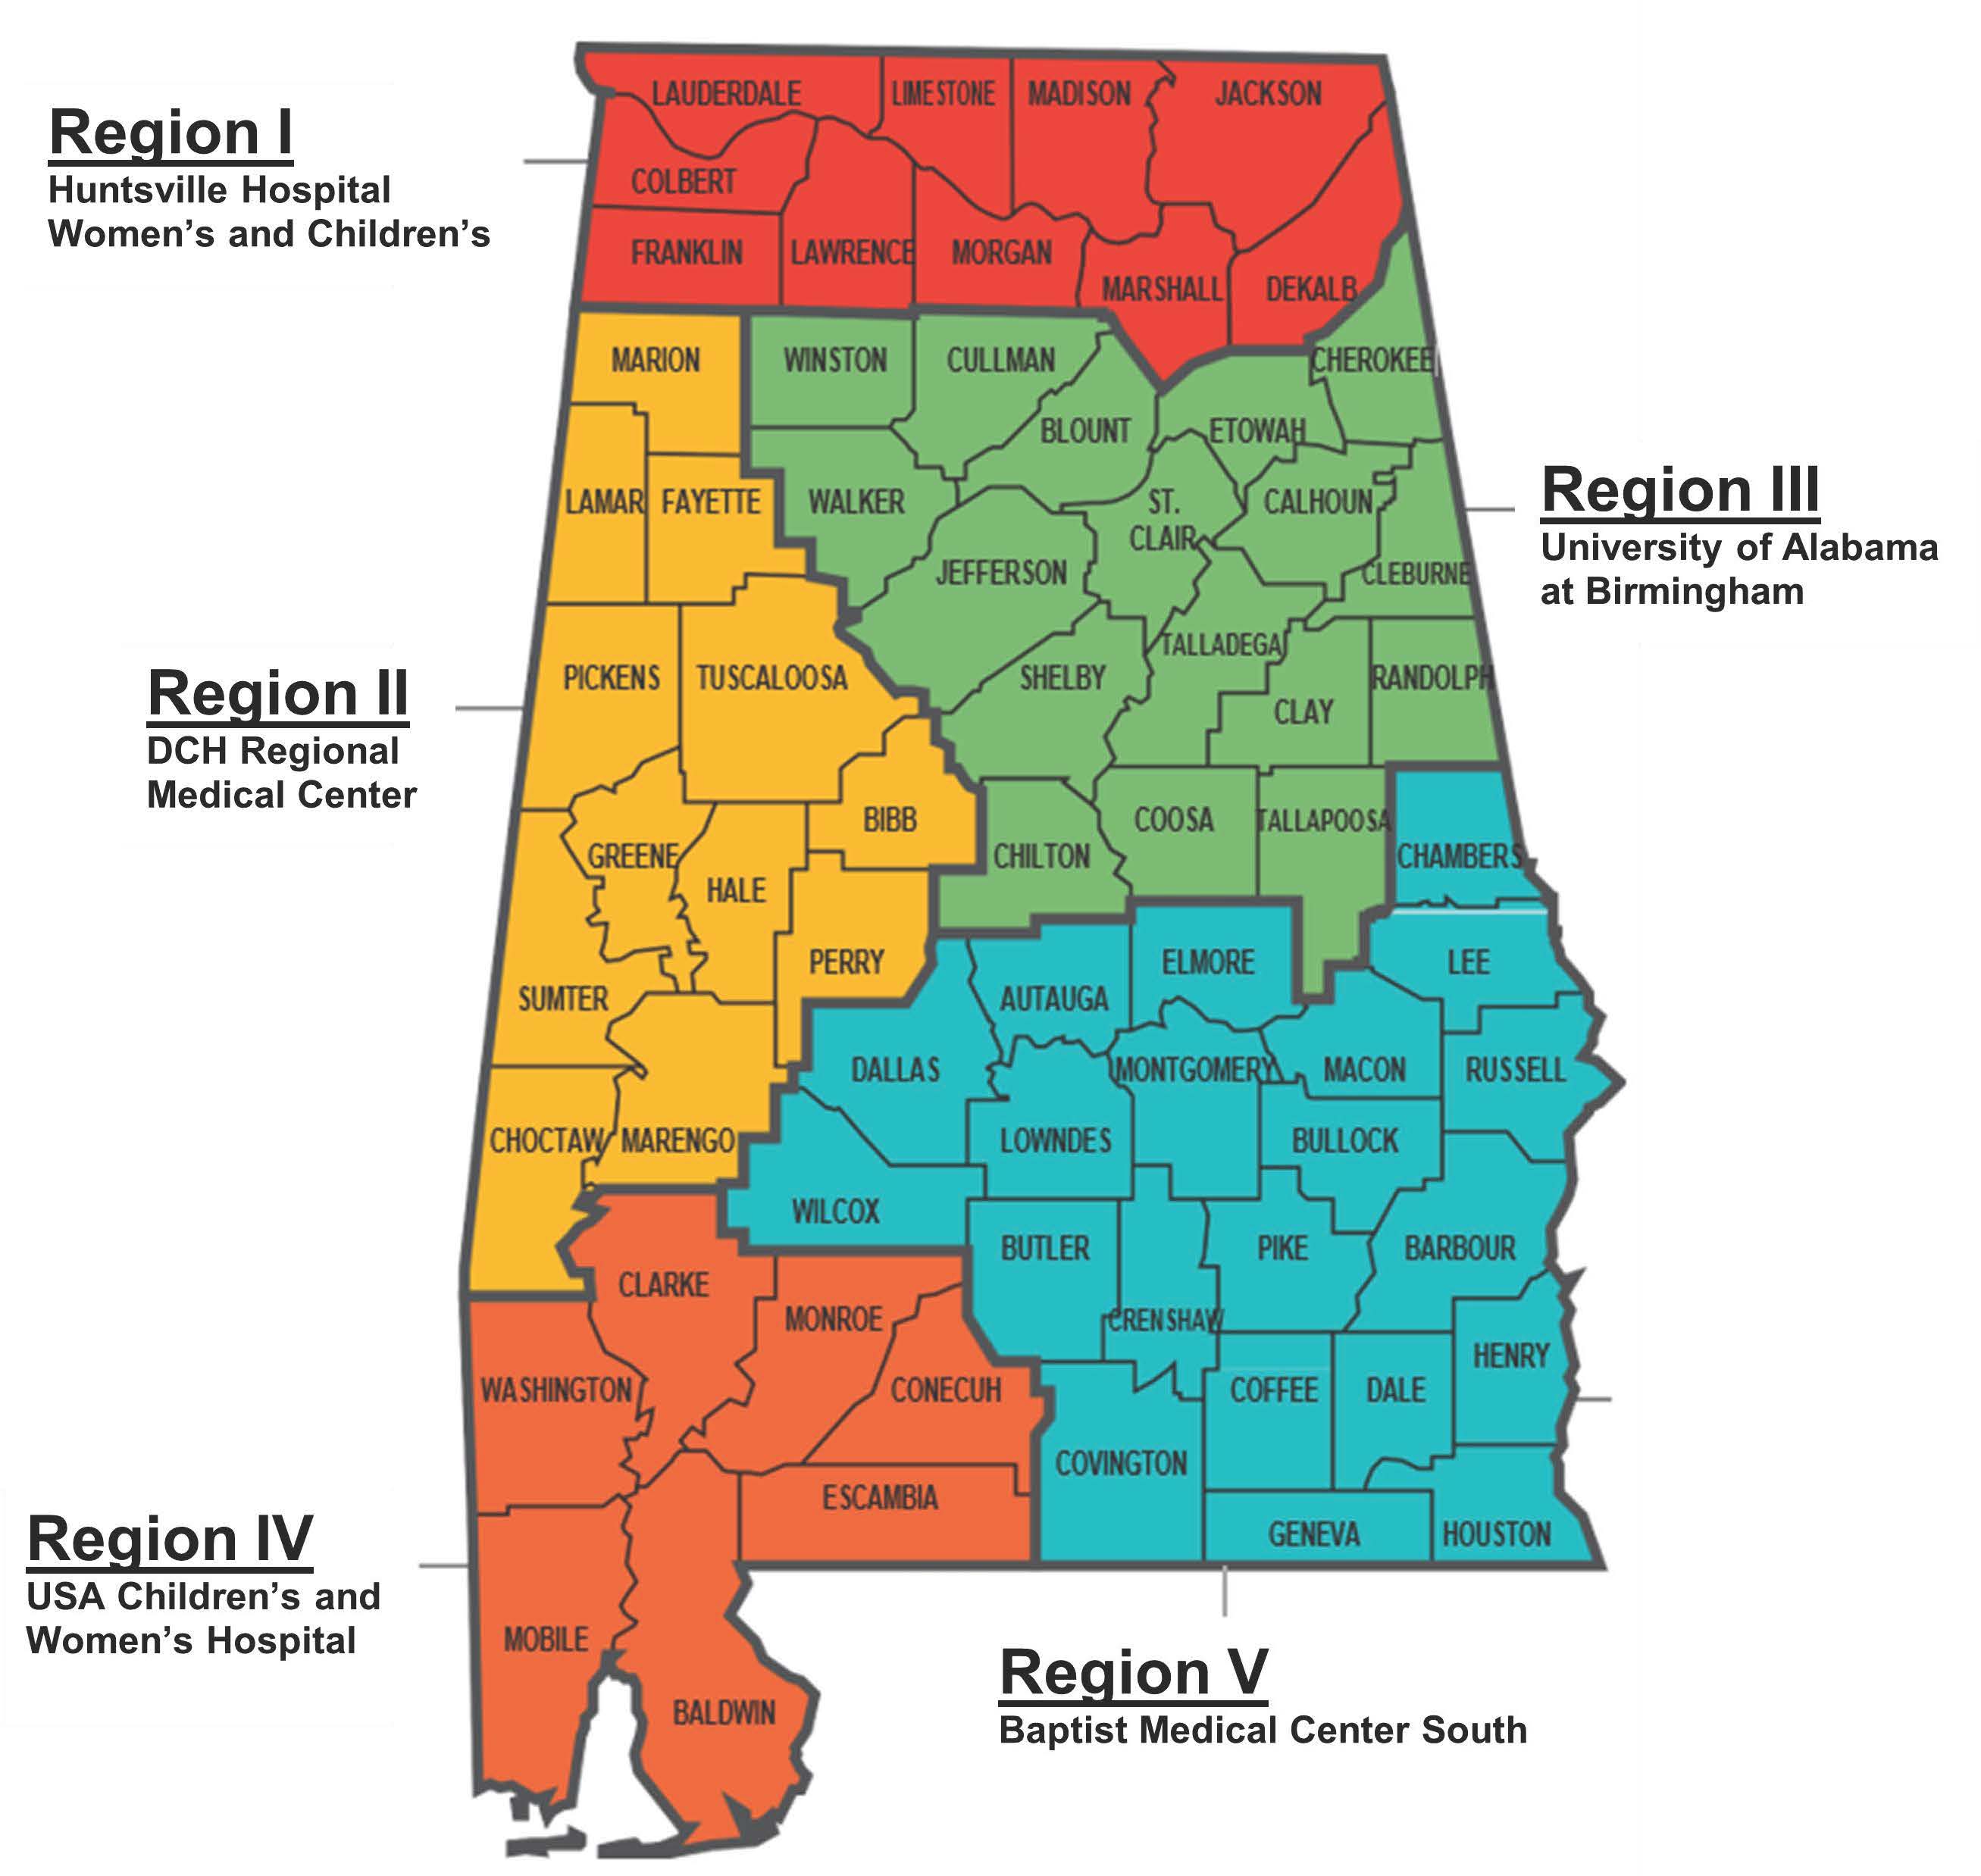 Alabama amateur county marshall repeater